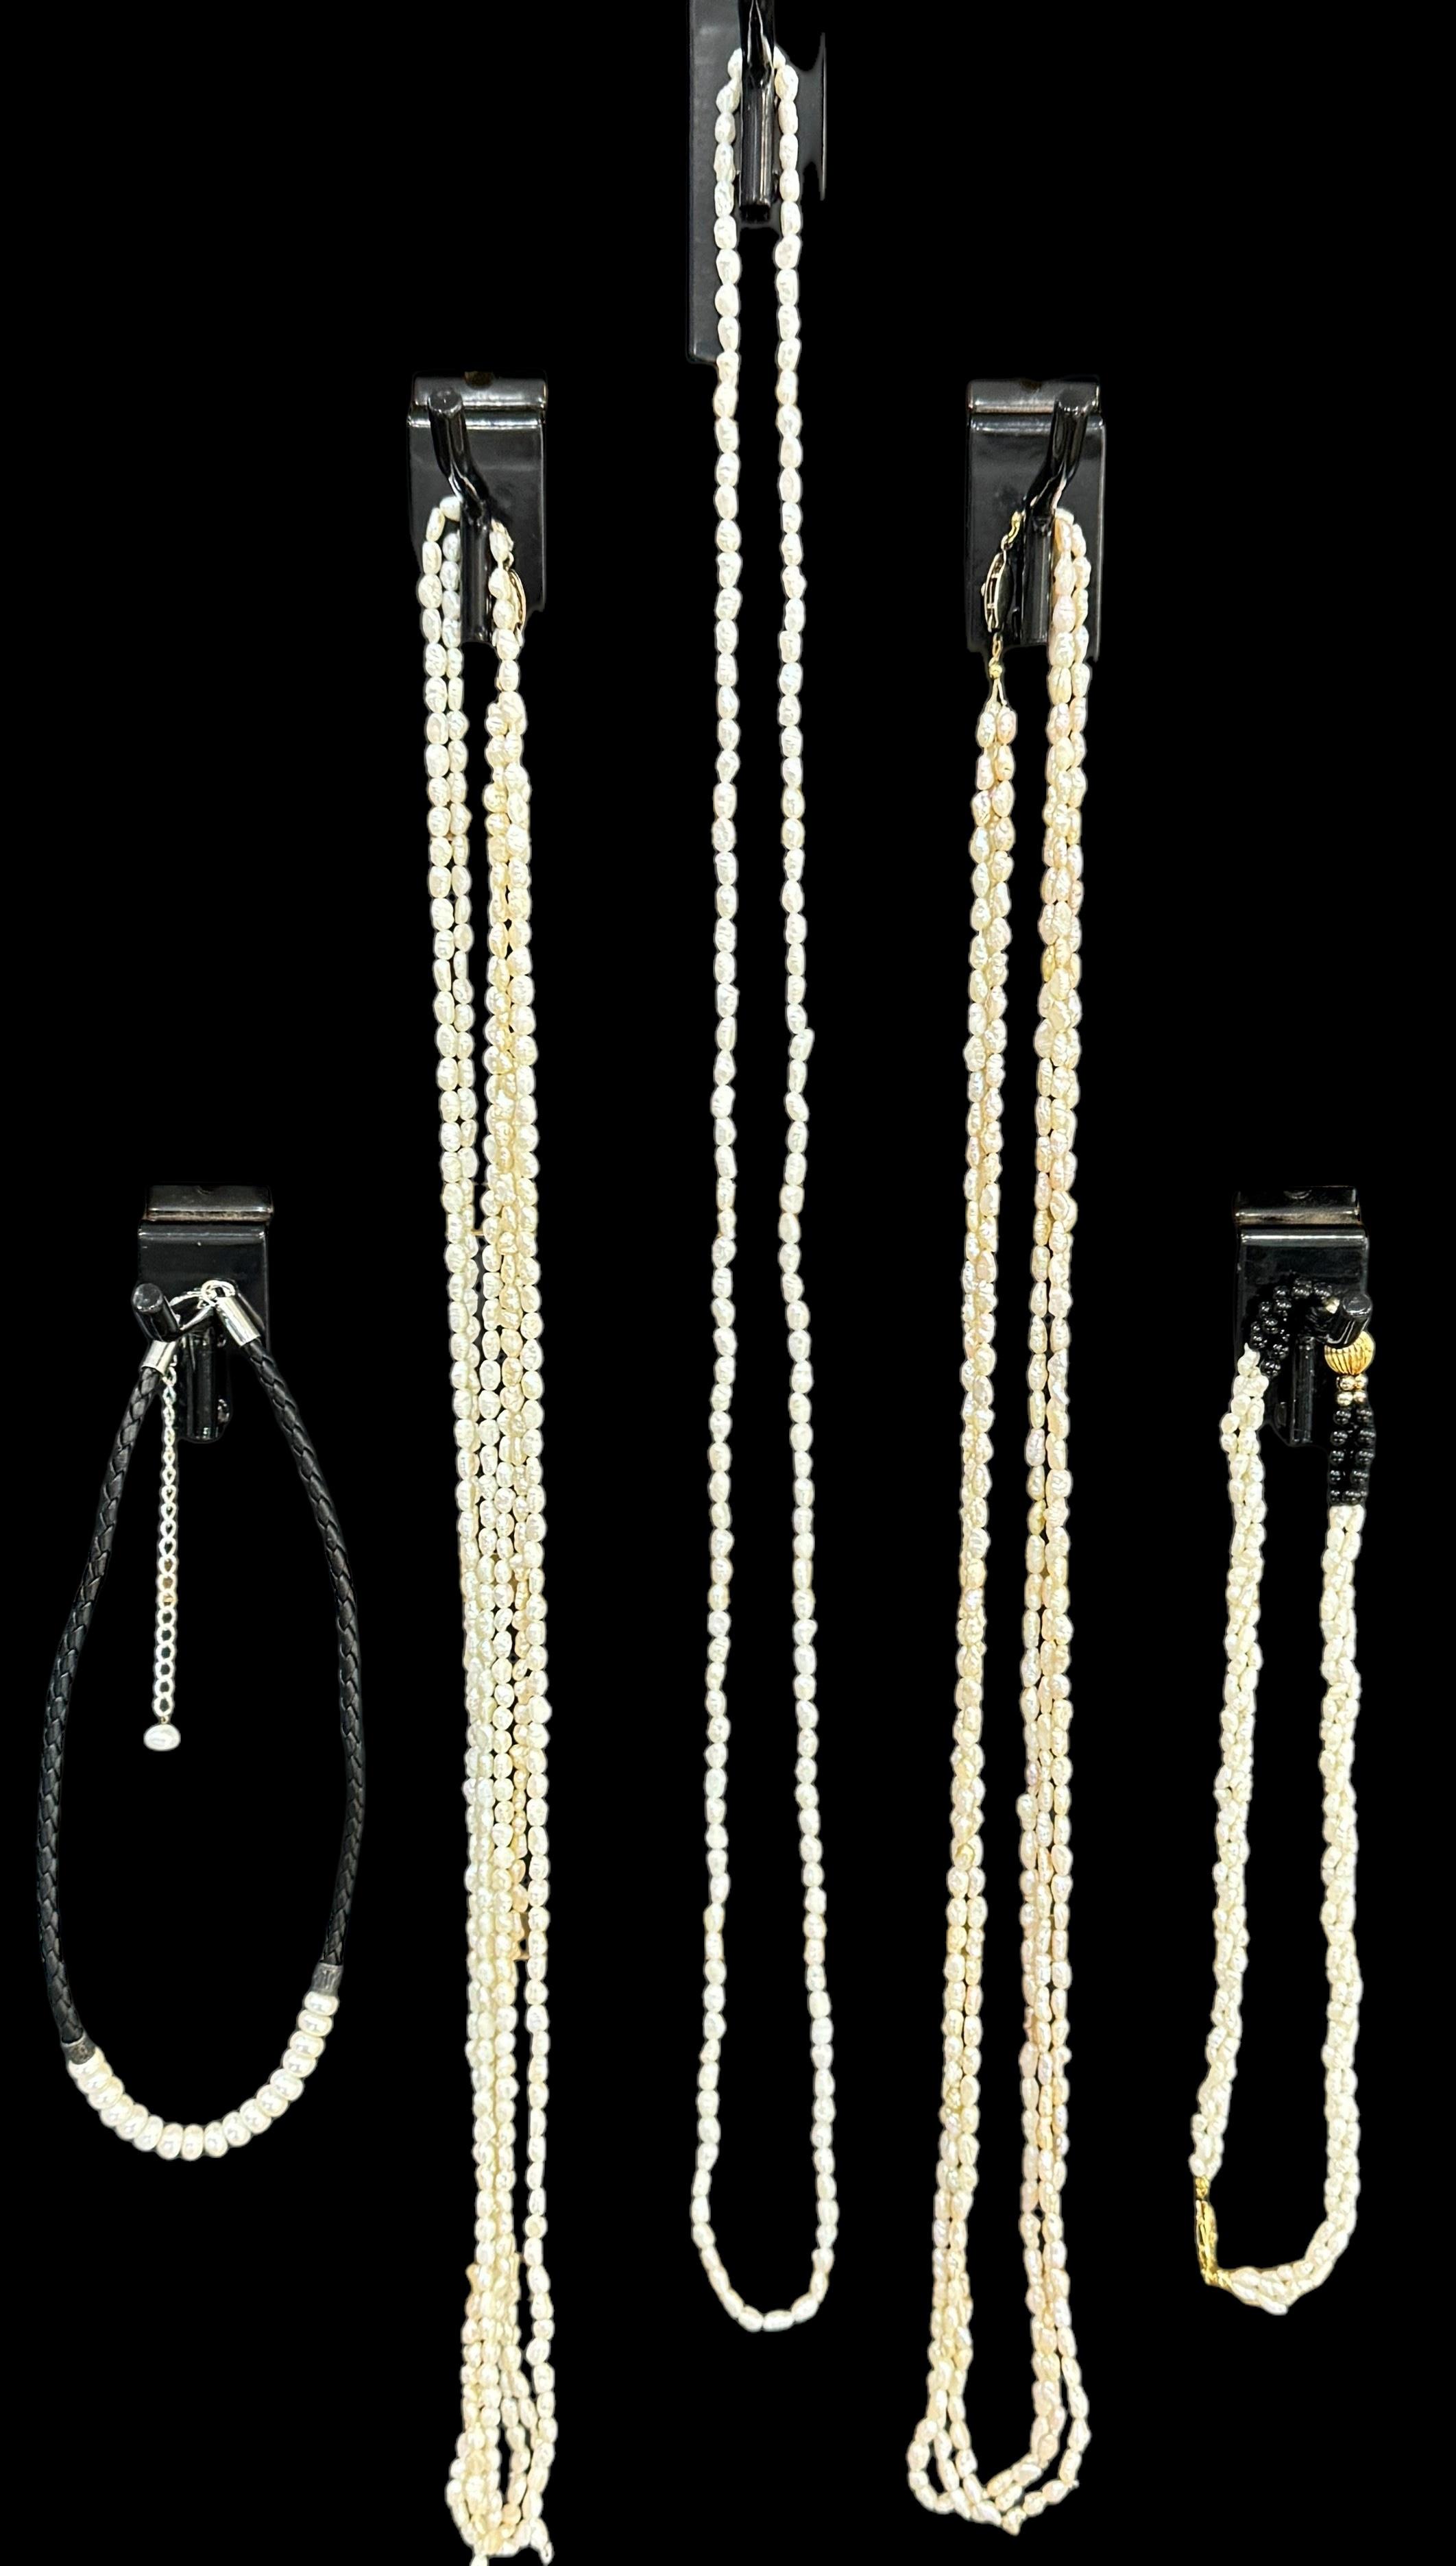 Lot of 5 estate genuine pearl necklaces